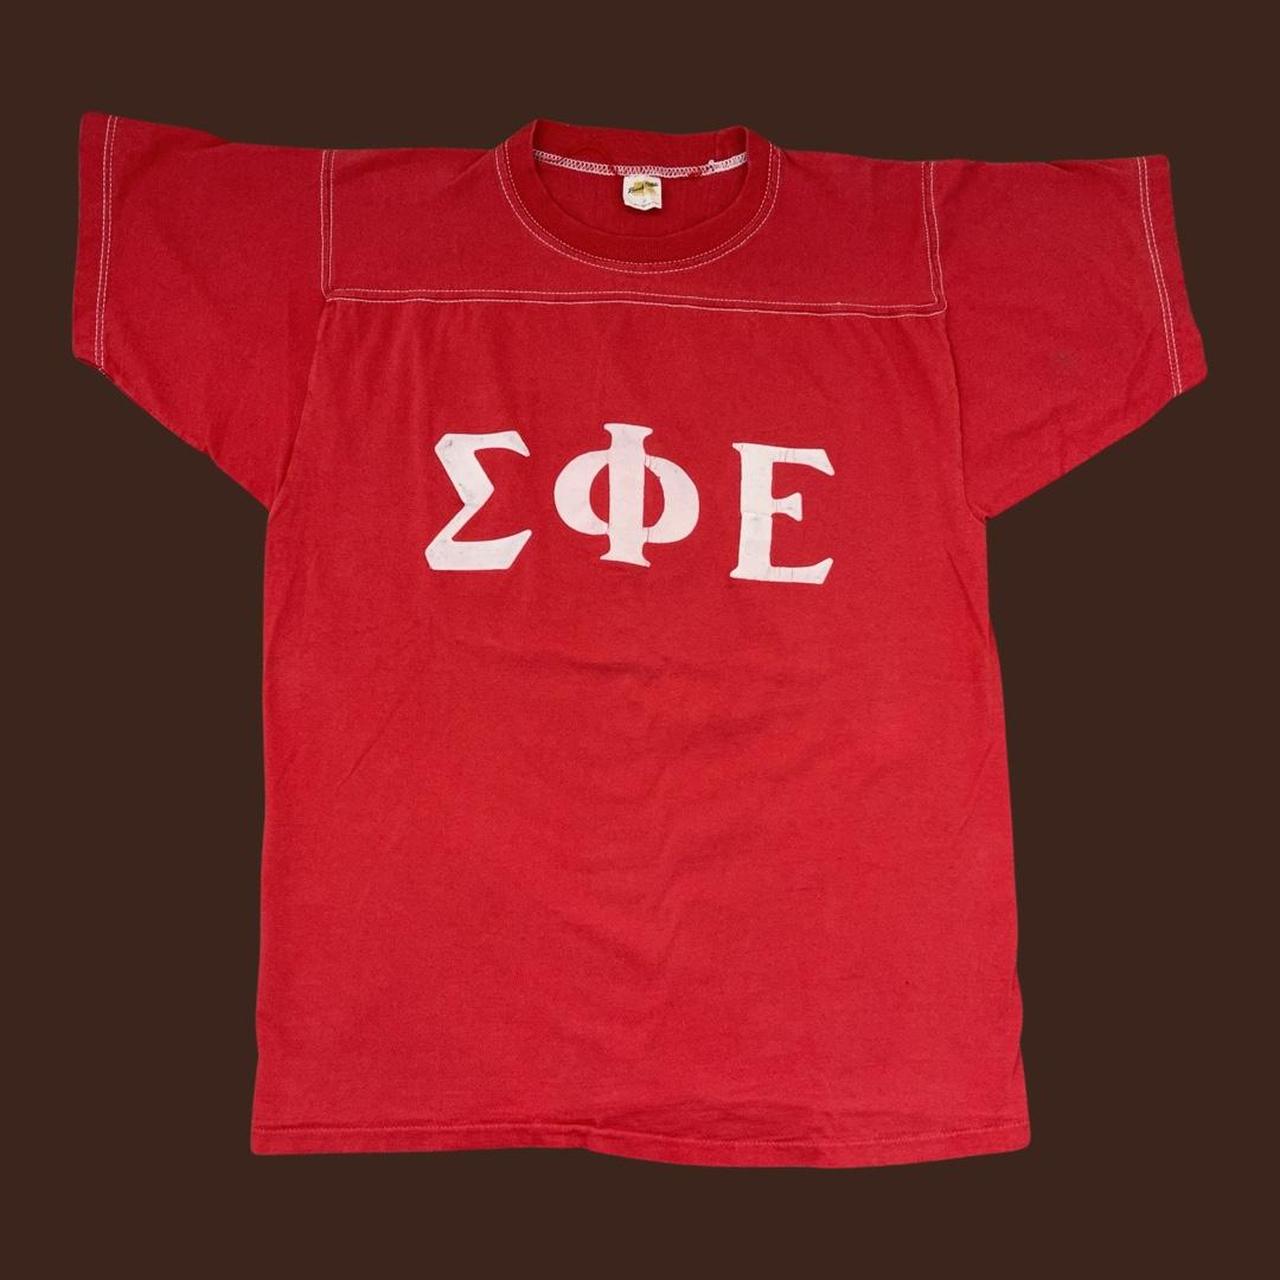 Vintage 70s red fraternity sorority raglan t shirt... - Depop